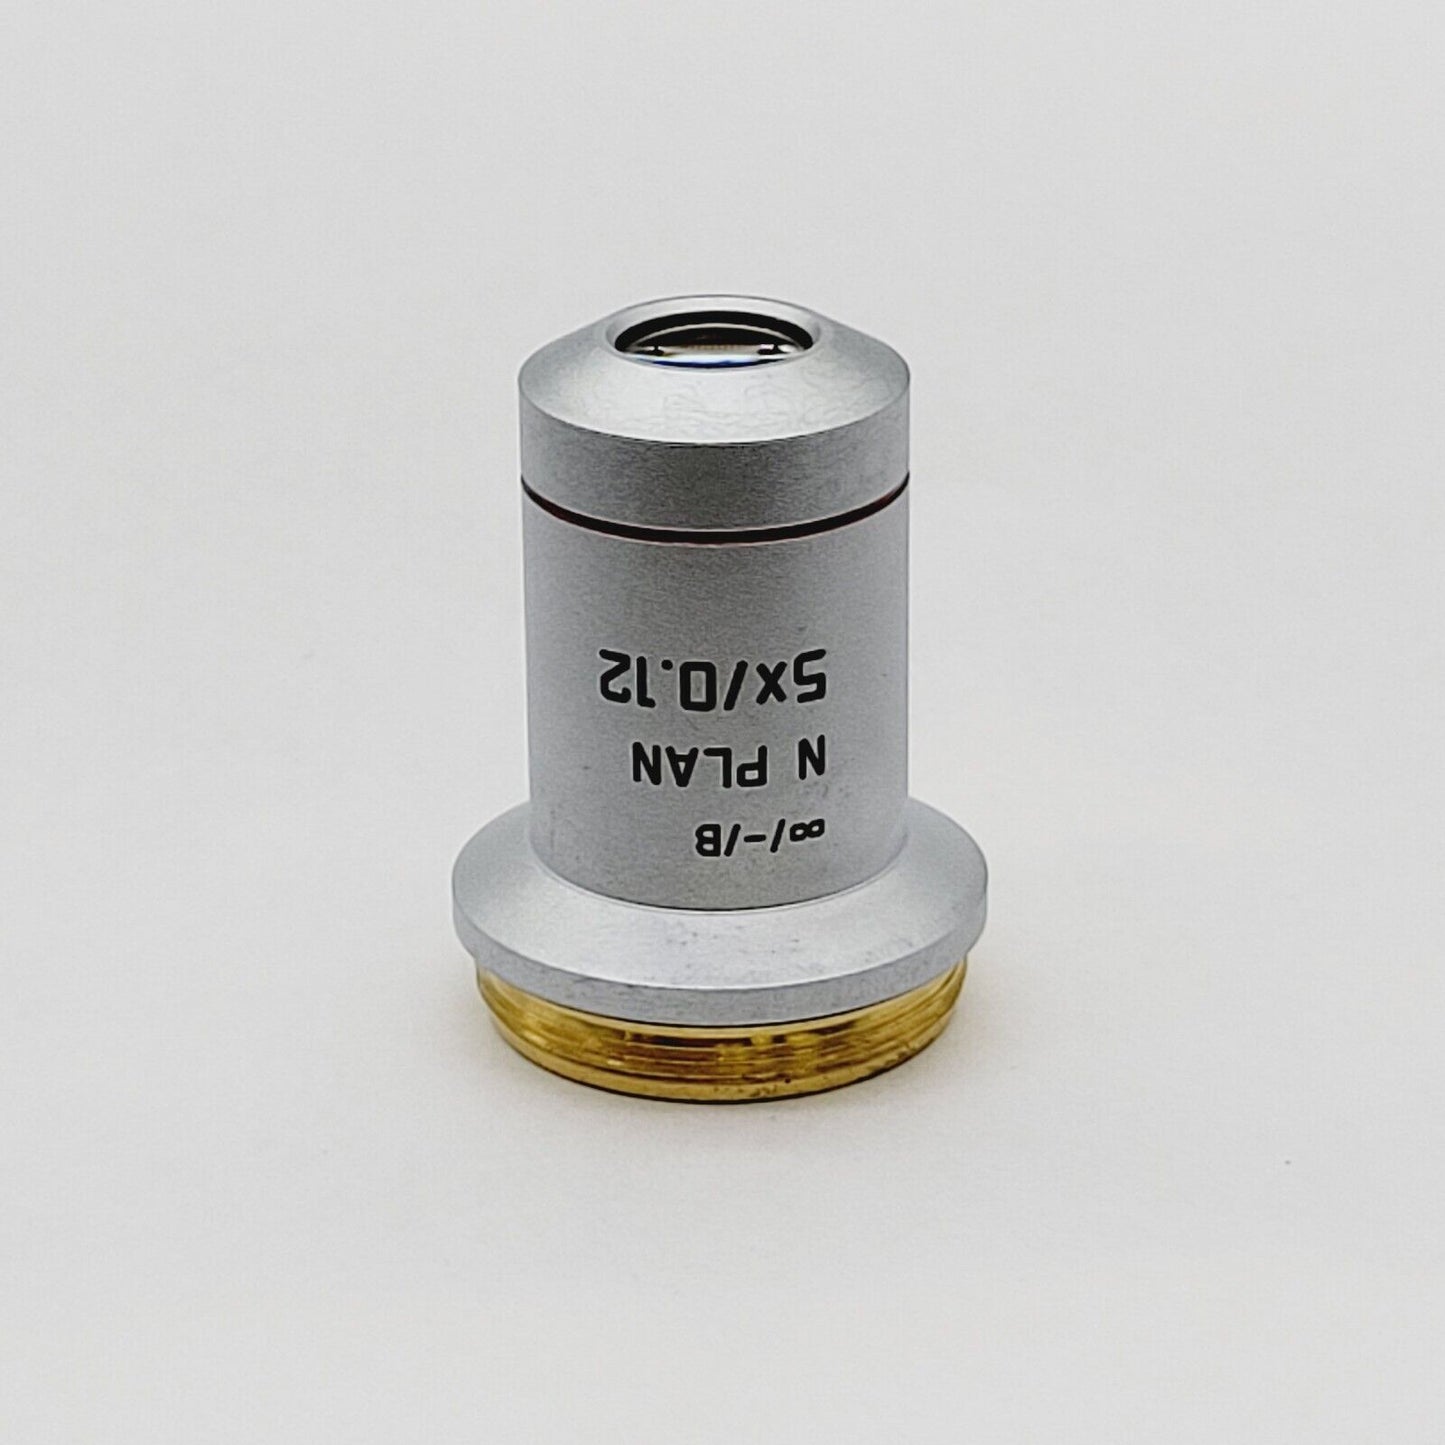 Leica Microscope Objective N Plan 5x ∞/-/B 506302 - microscopemarketplace